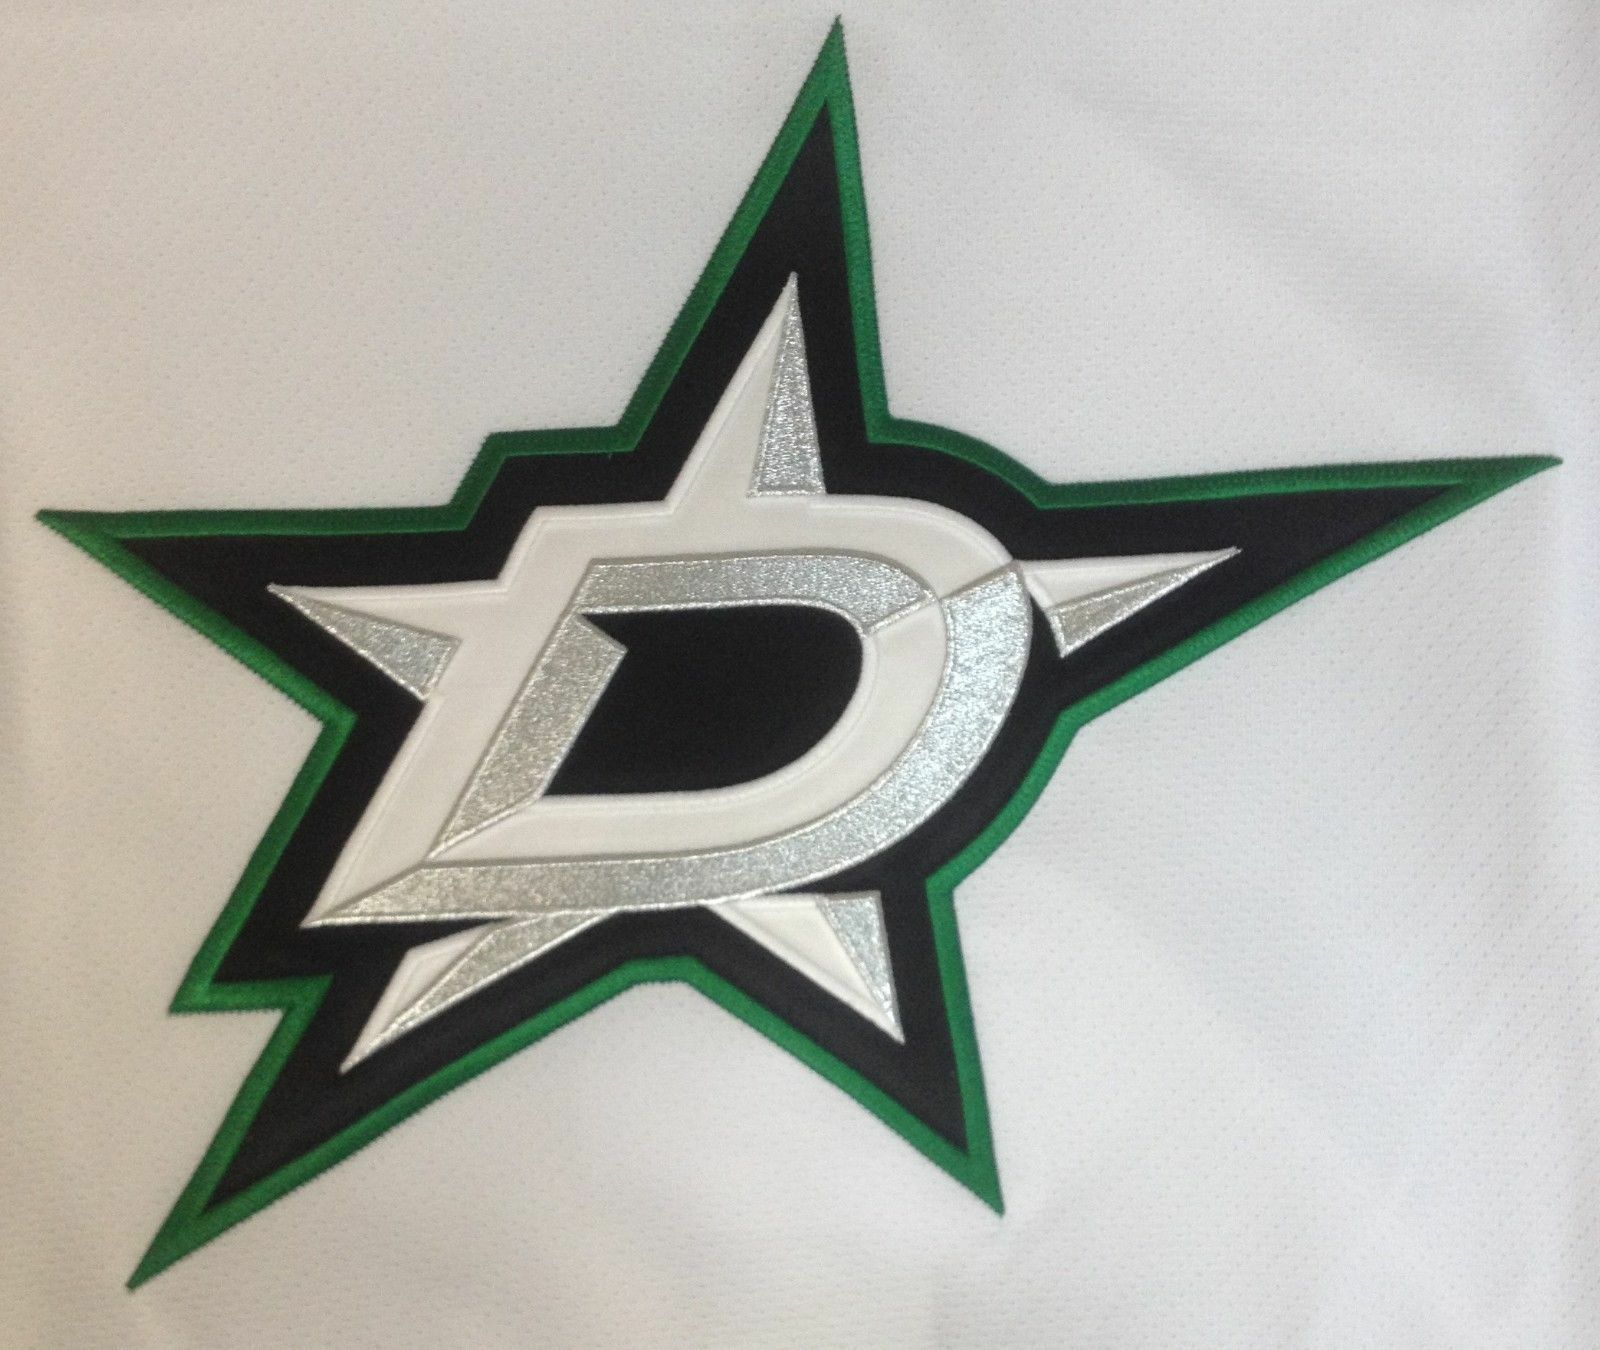 DALLAS STARS reebok NHL authentic EDGE 1.0 hockey jersey away-white size 52 NEW Image 6